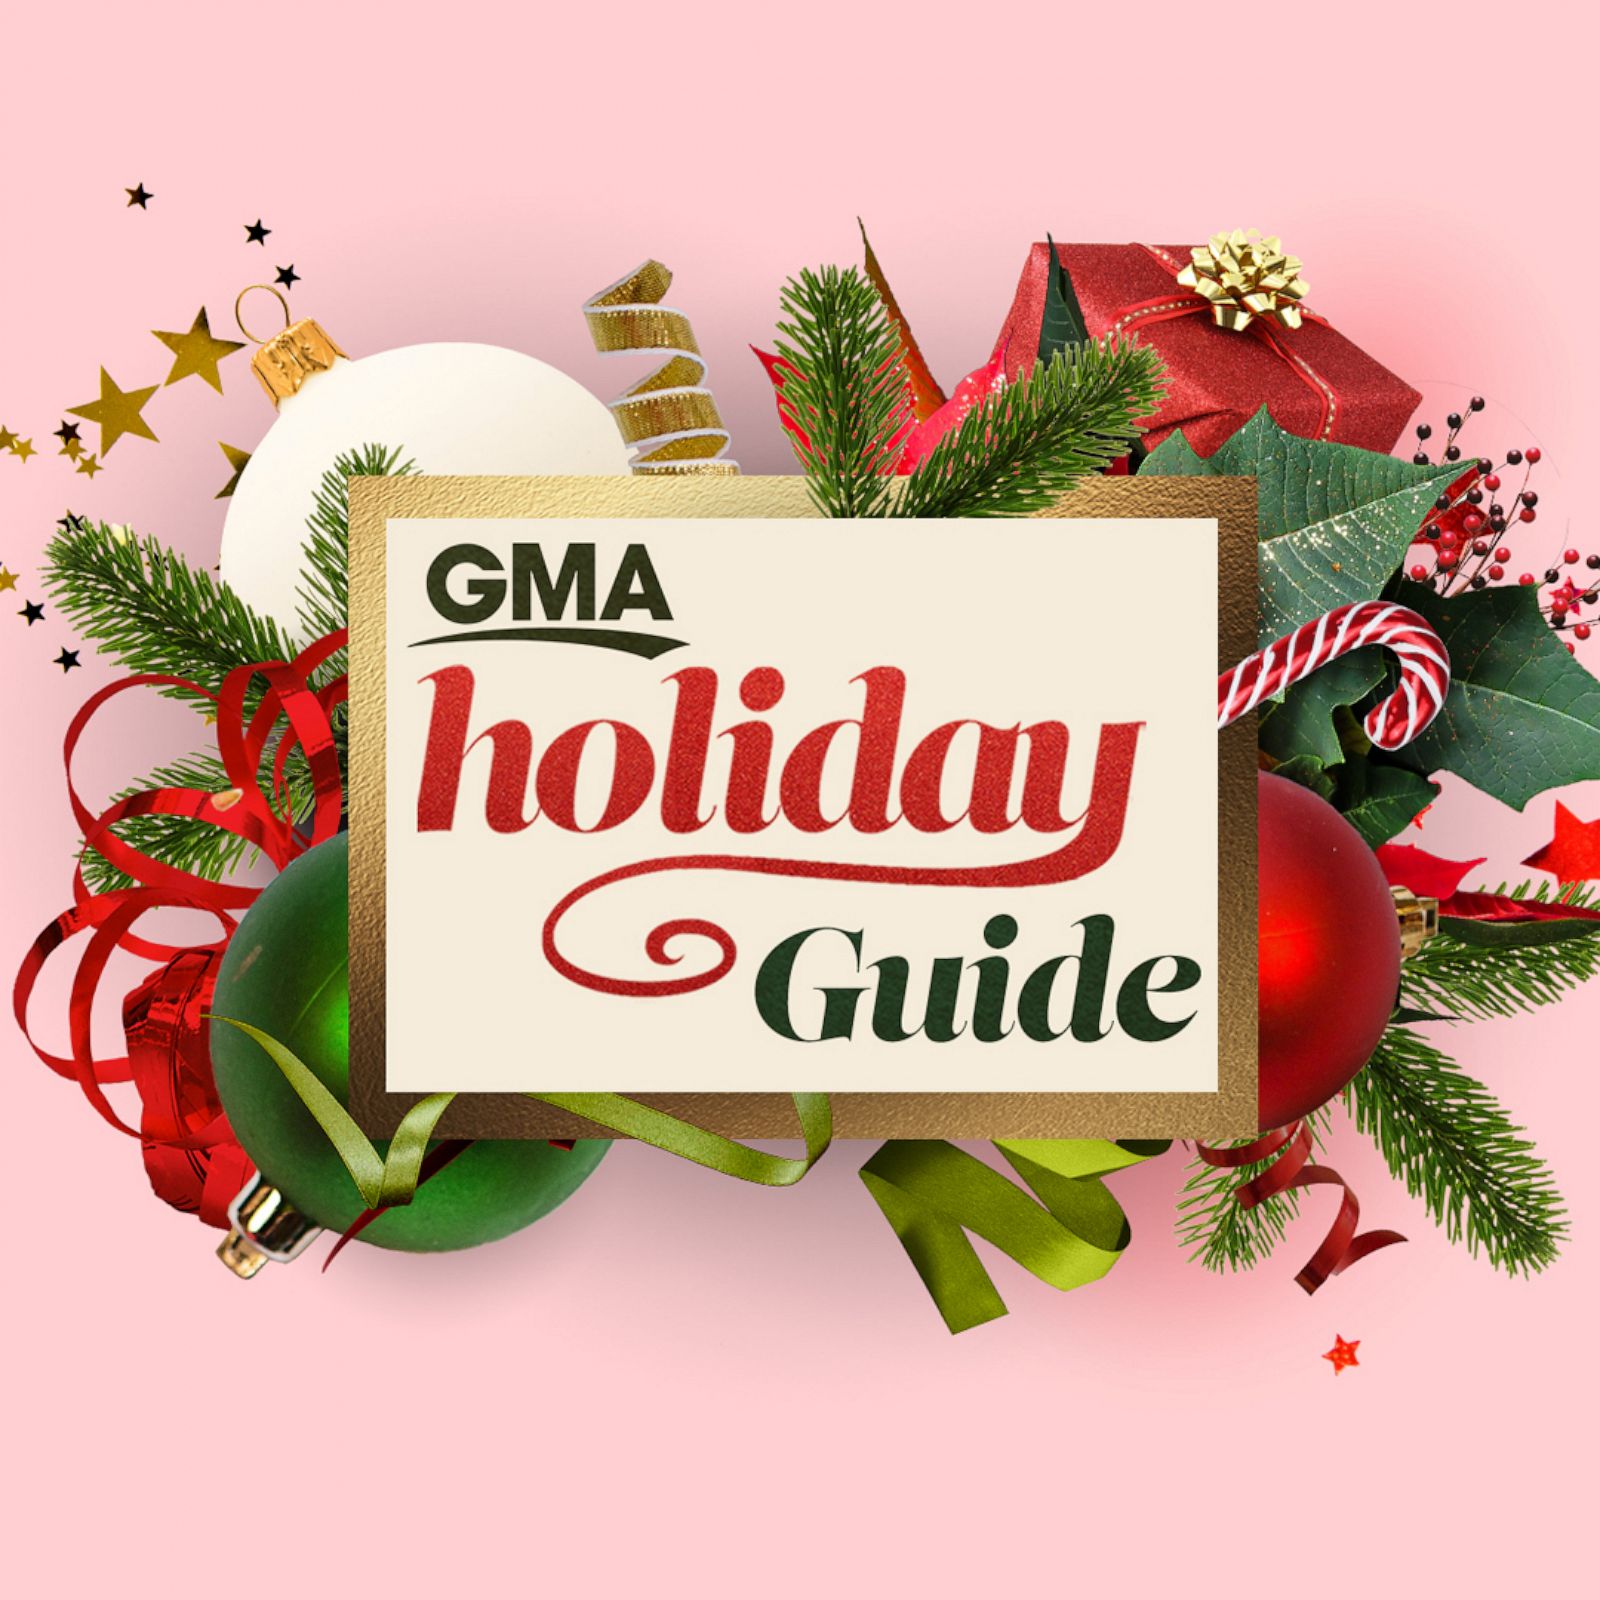 GMA Holiday Guide - Good Morning America